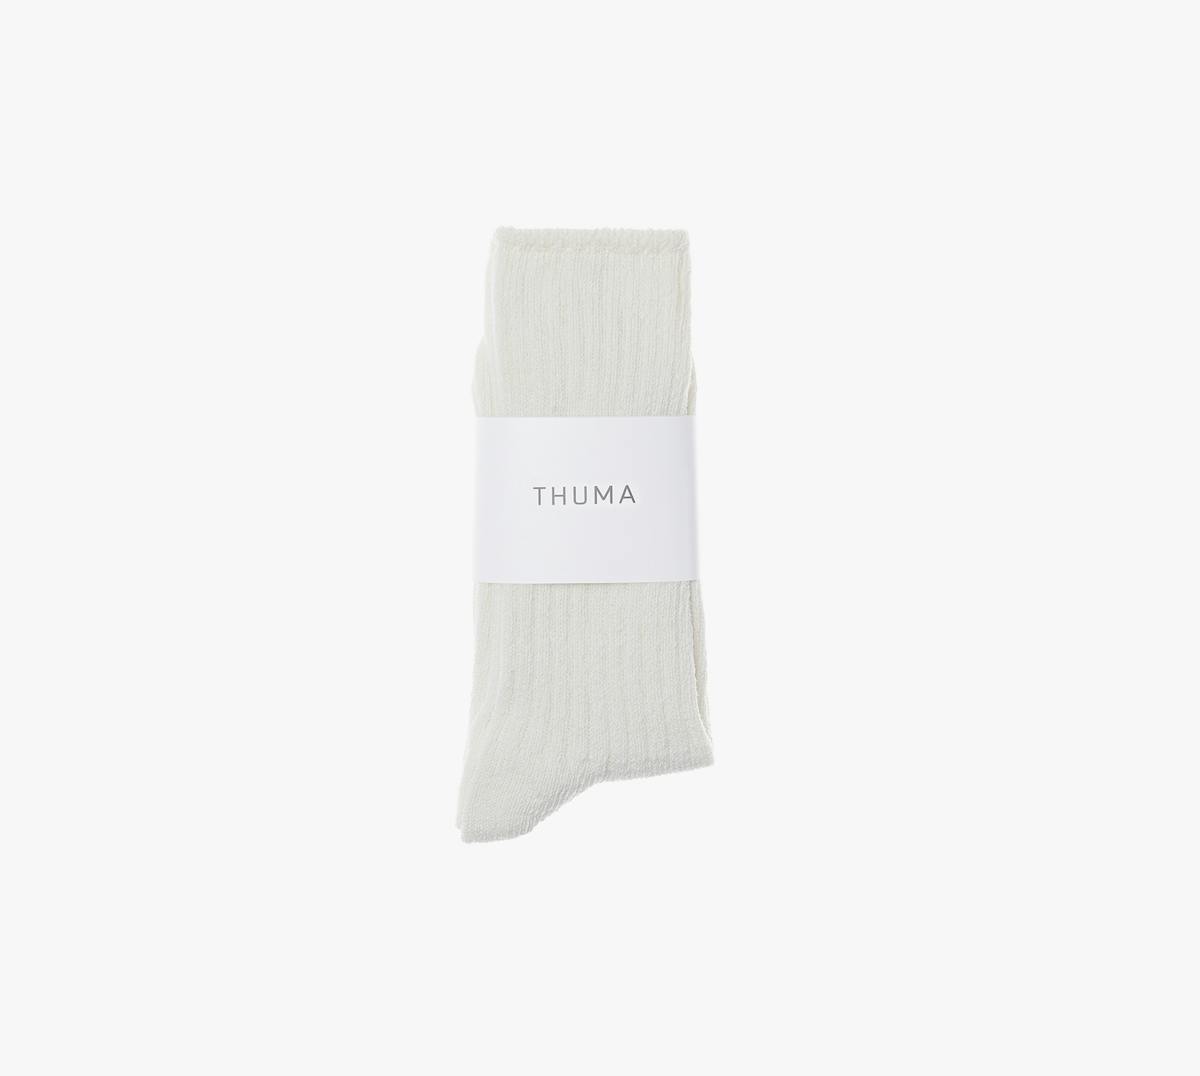 Lounge & Leisure Socks (Natural White) - Full Product